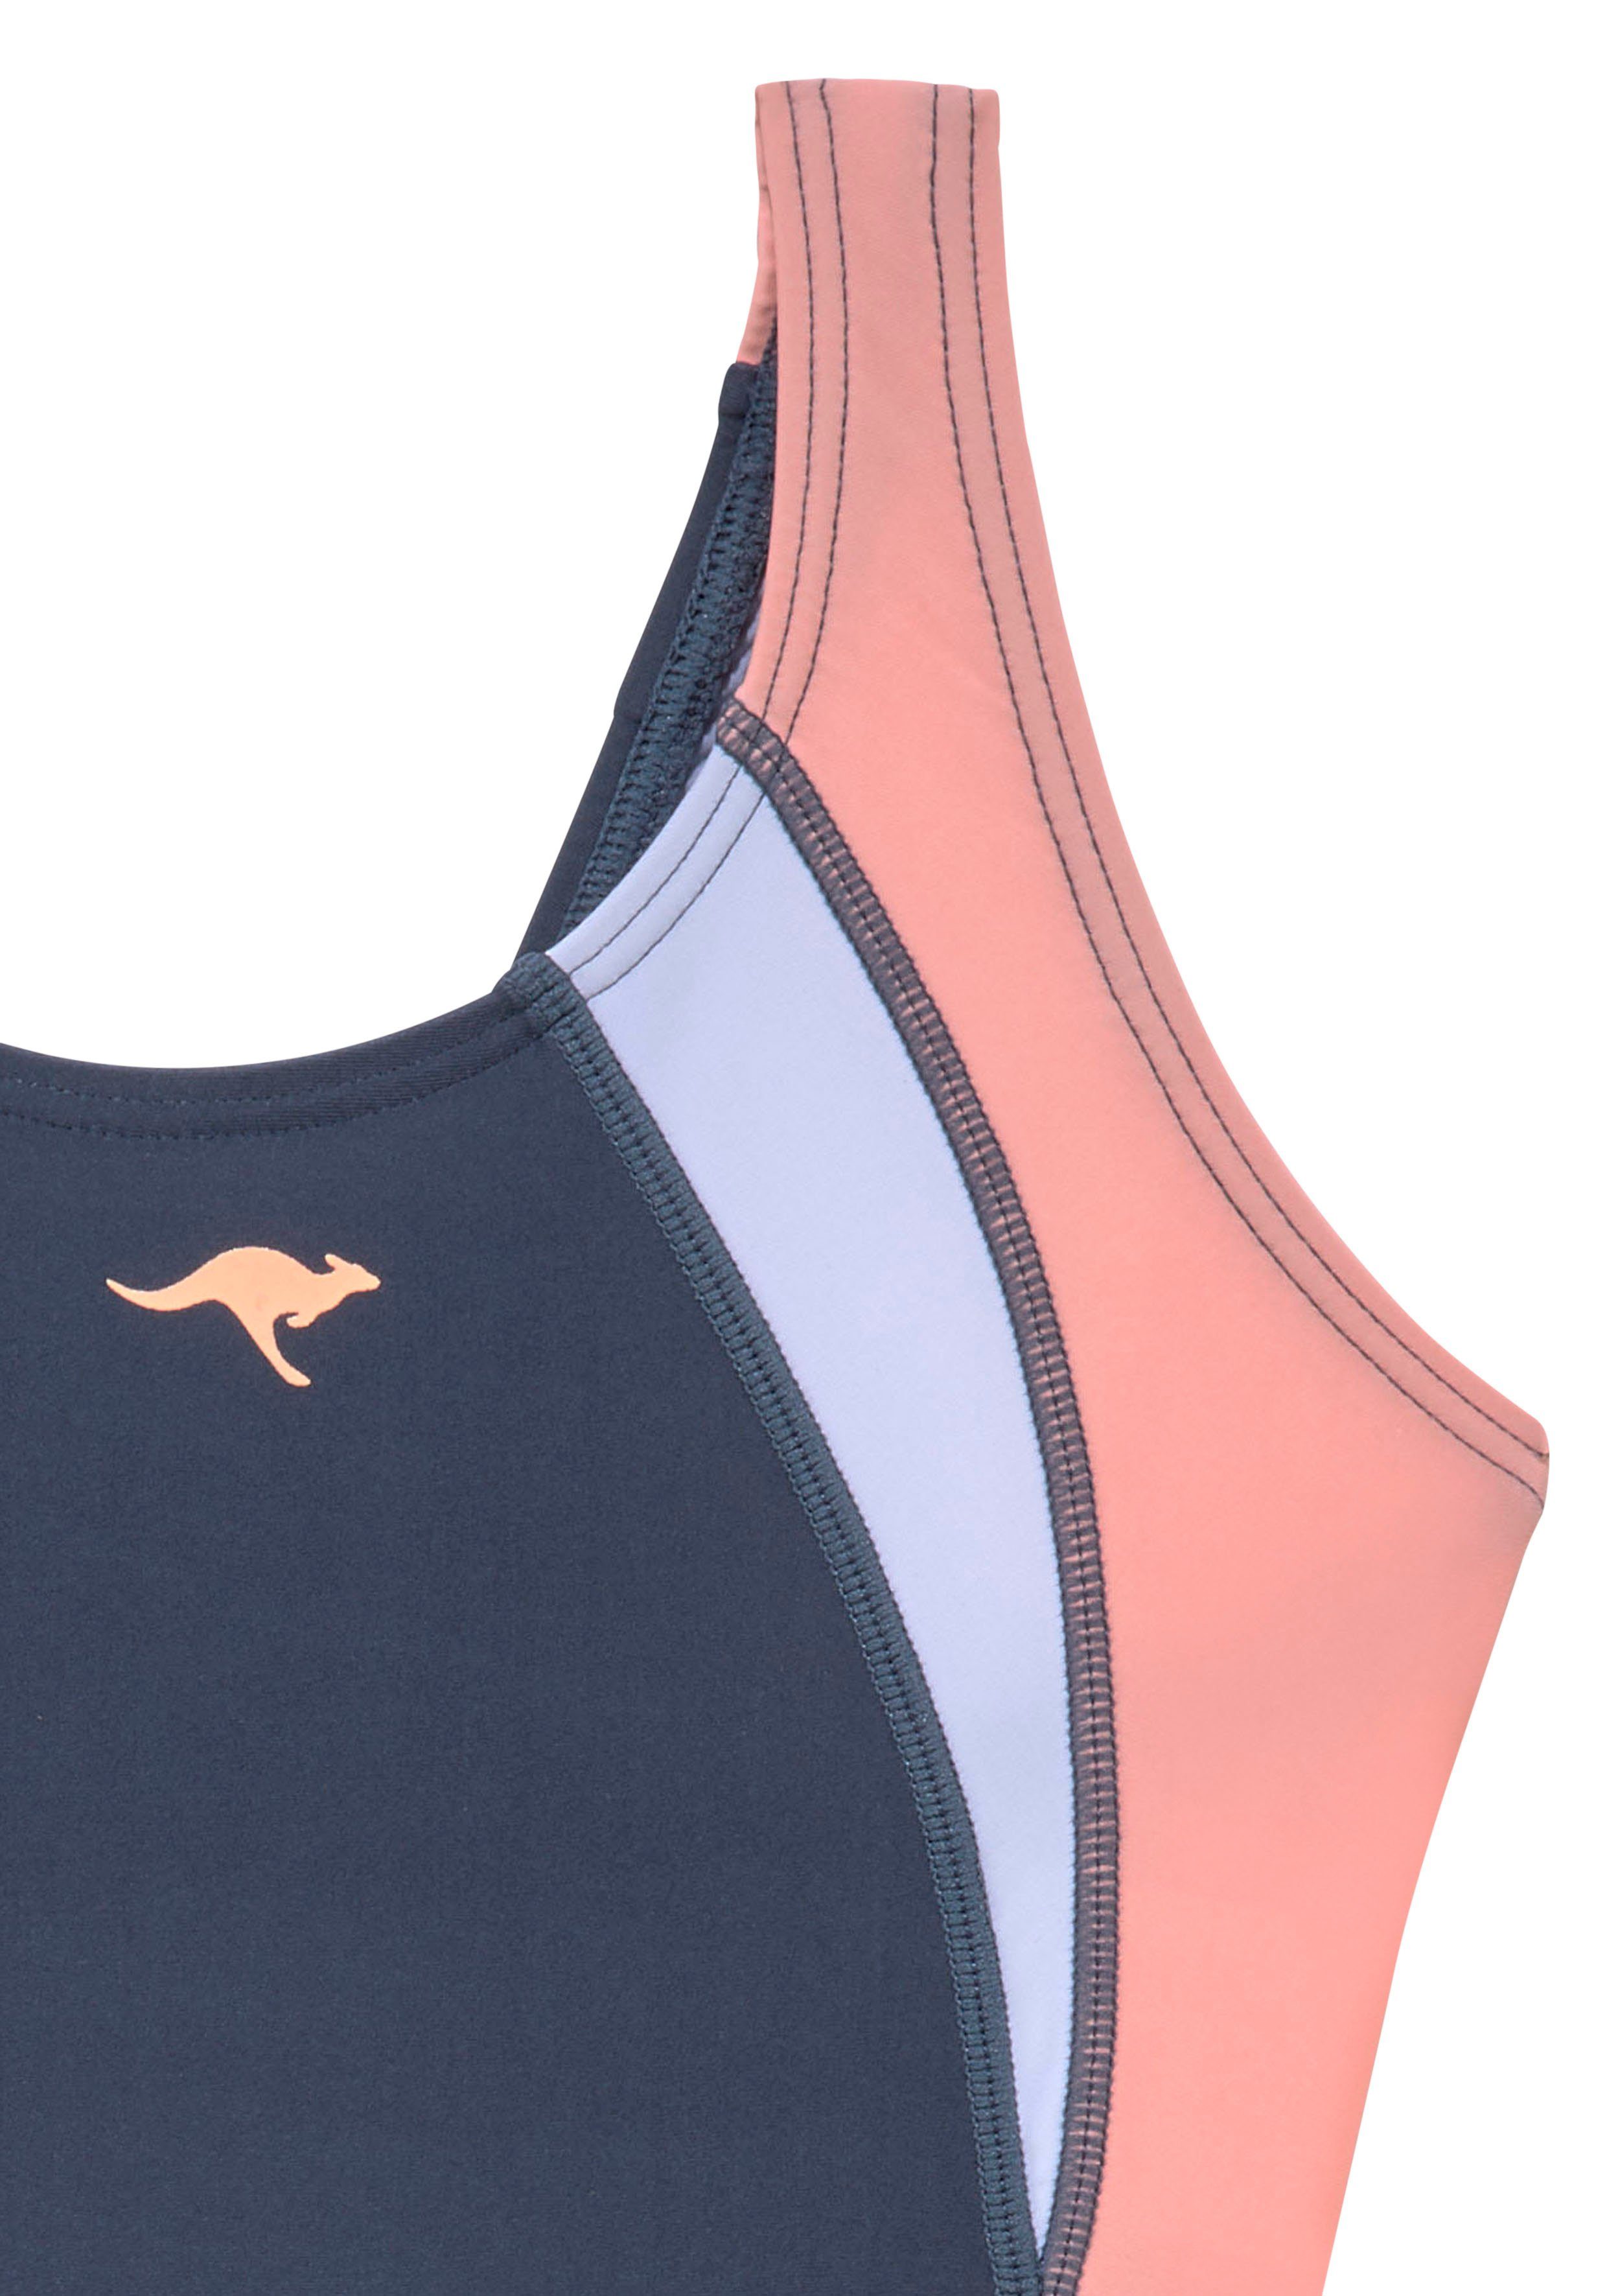 KangaROOS Badeanzug im sportlichen Farbmix rauchblau-hummer